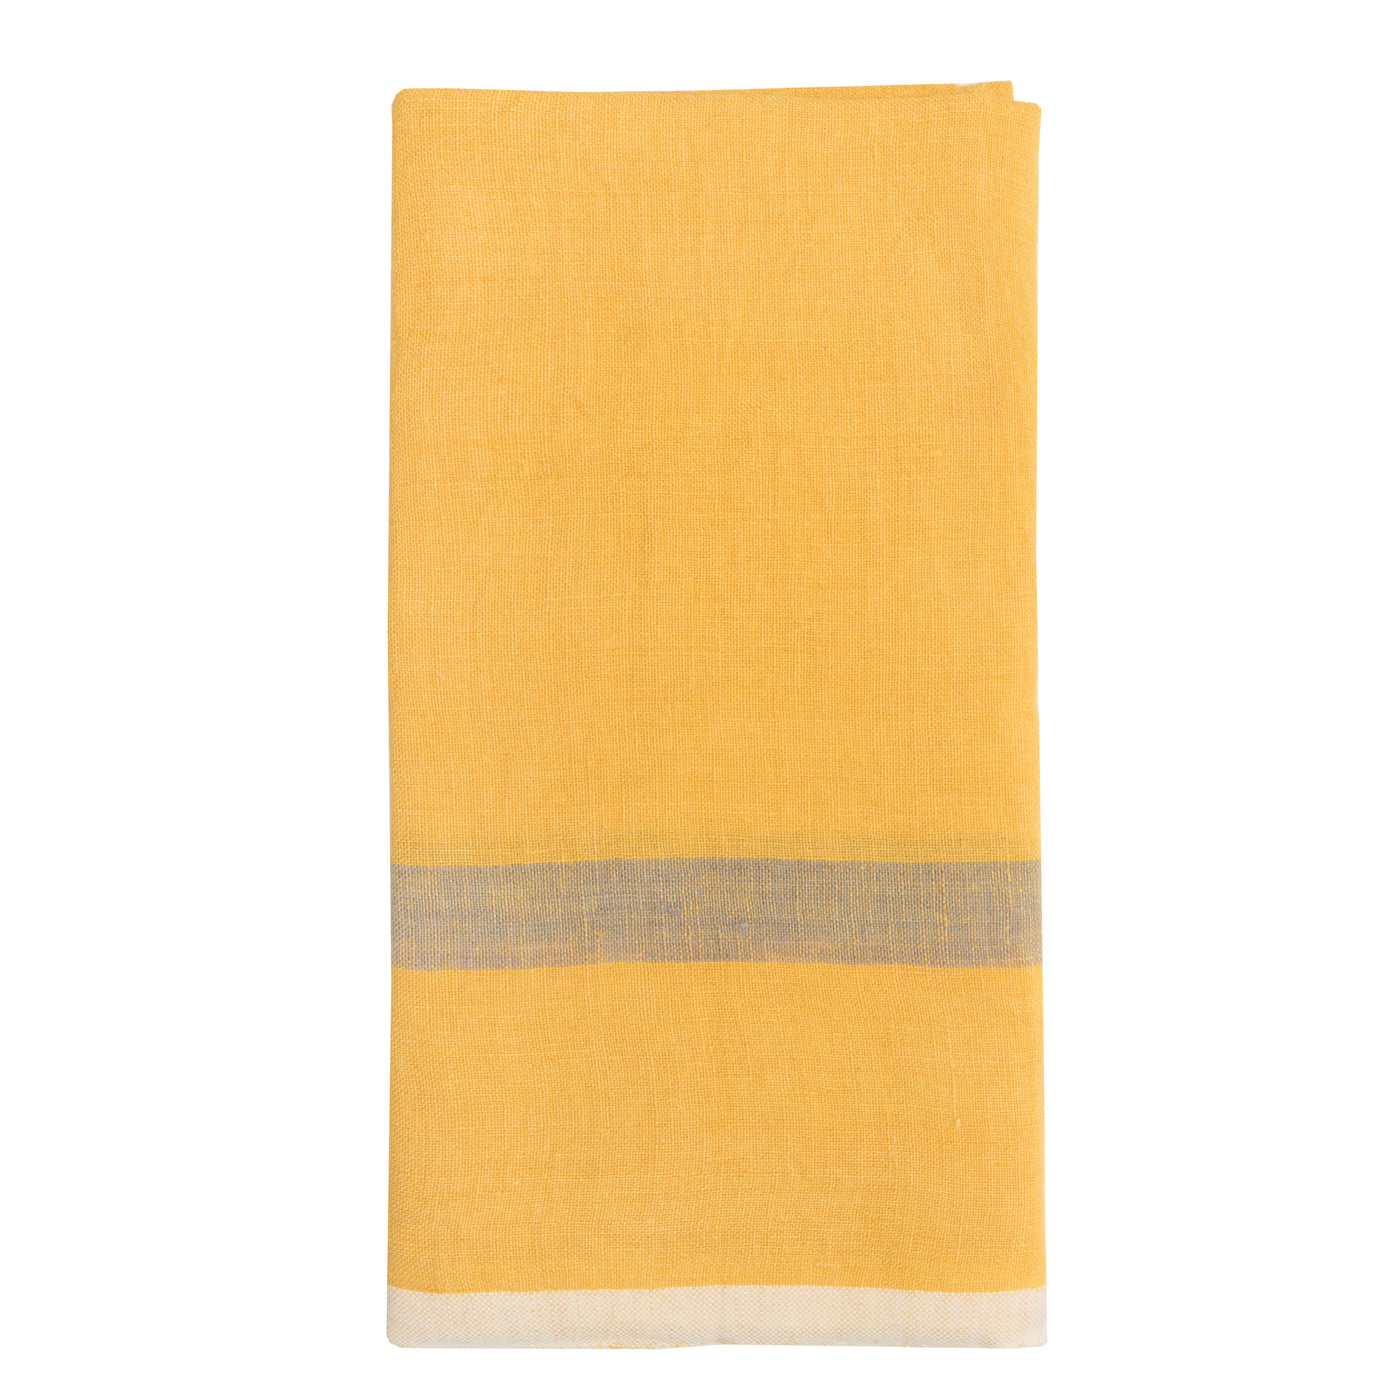 Laundered Linen Kitchen Towels Mustard & Grey, Set of 2